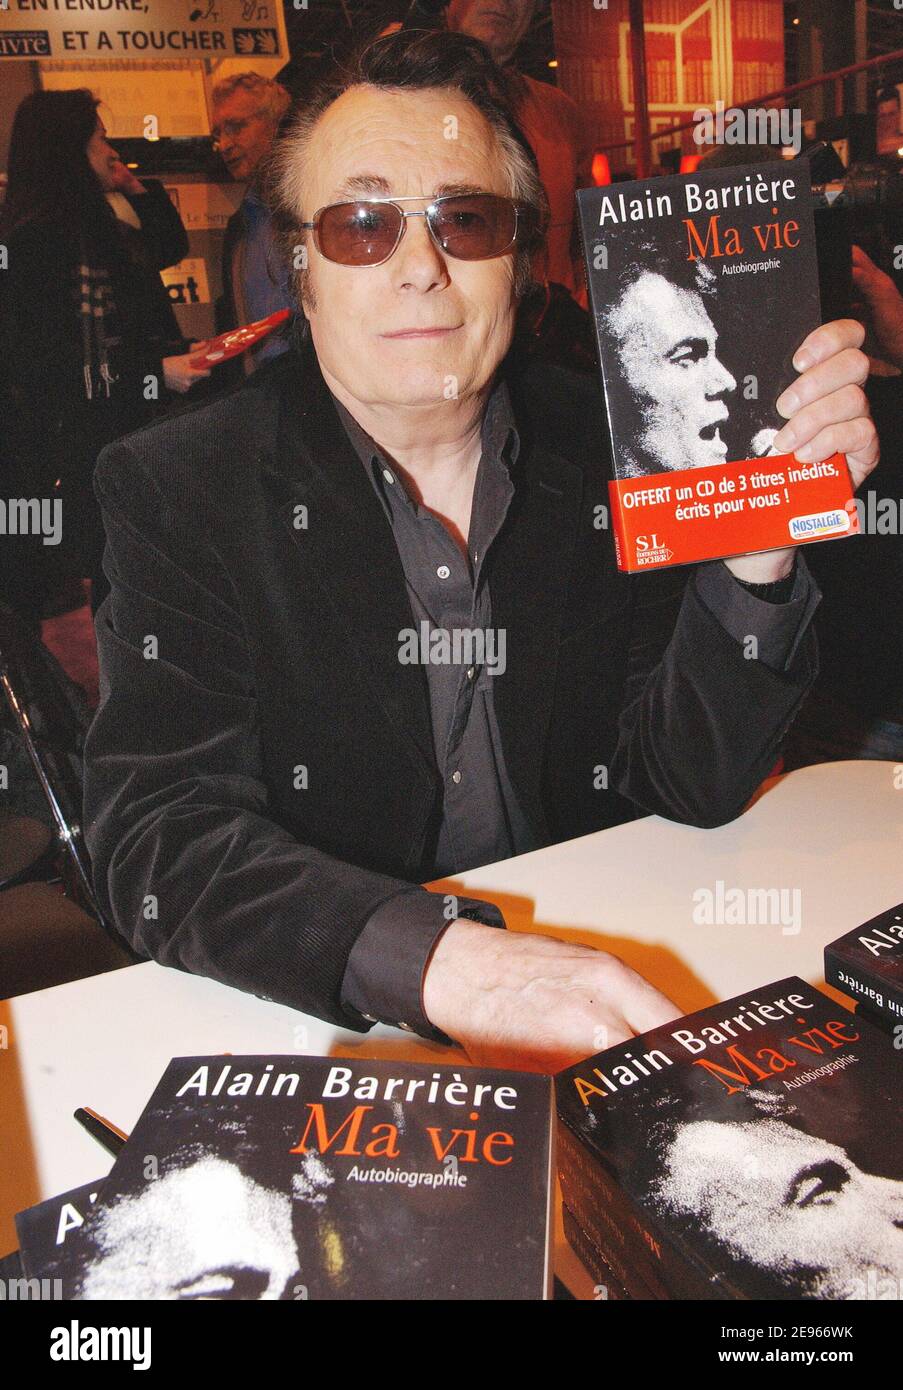 French singer and author Alain Barriere promotes his biography 'Ma Vie'  during the Paris Book Fair 'Le salon du Livre' held at Porte de Versailles,  in Paris, France, on March 17, 2006.